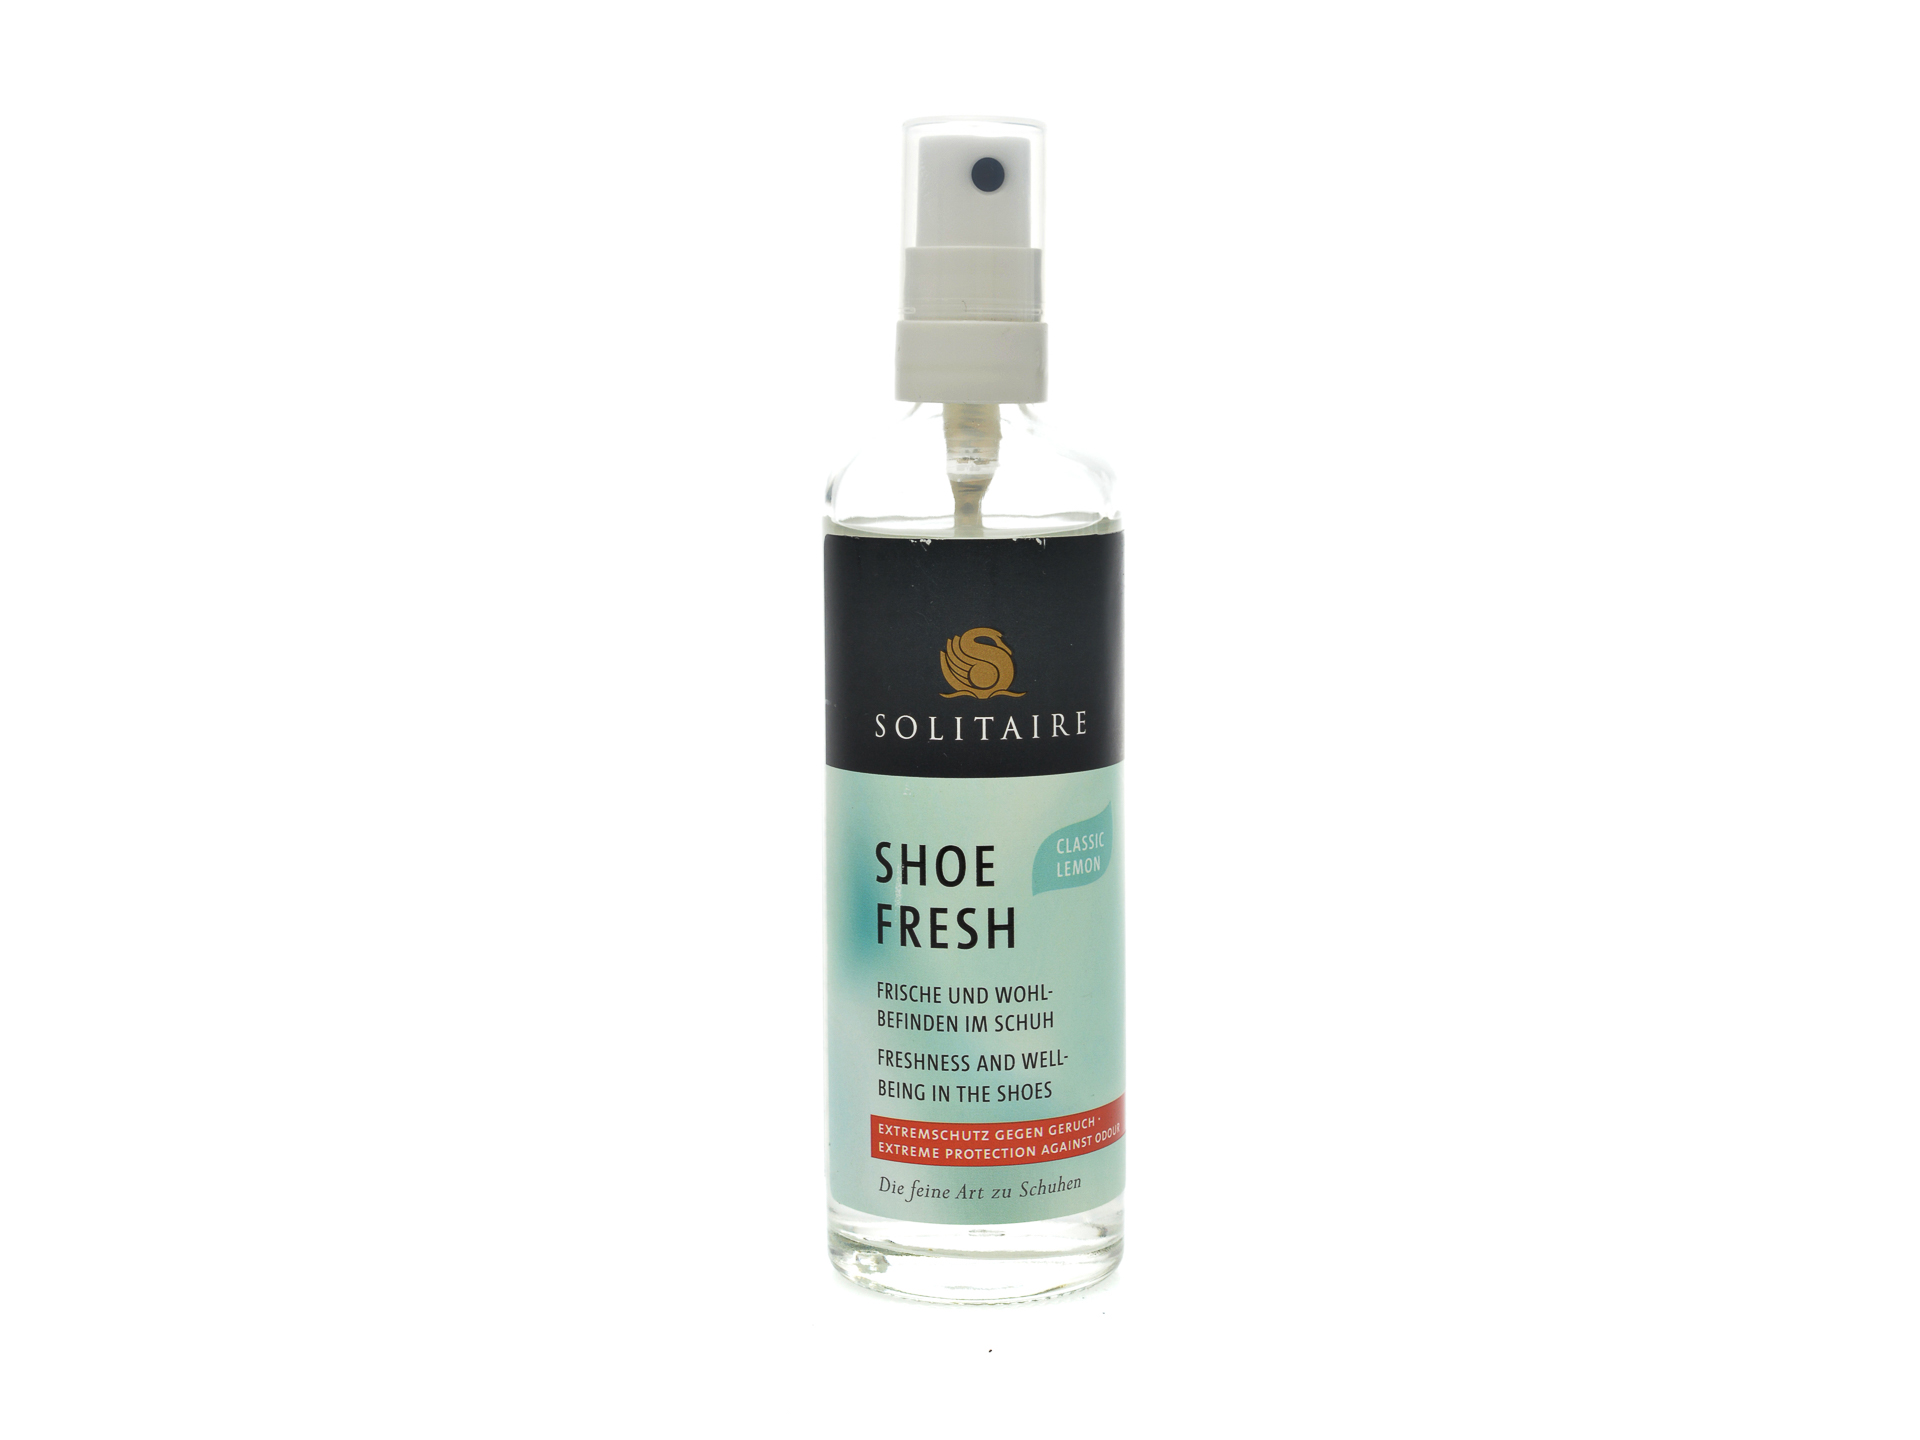 PR Spray pentru mentinerea mirosului placut in incaltaminte, Solitaire imagine reduceri black friday 2021 otter.ro